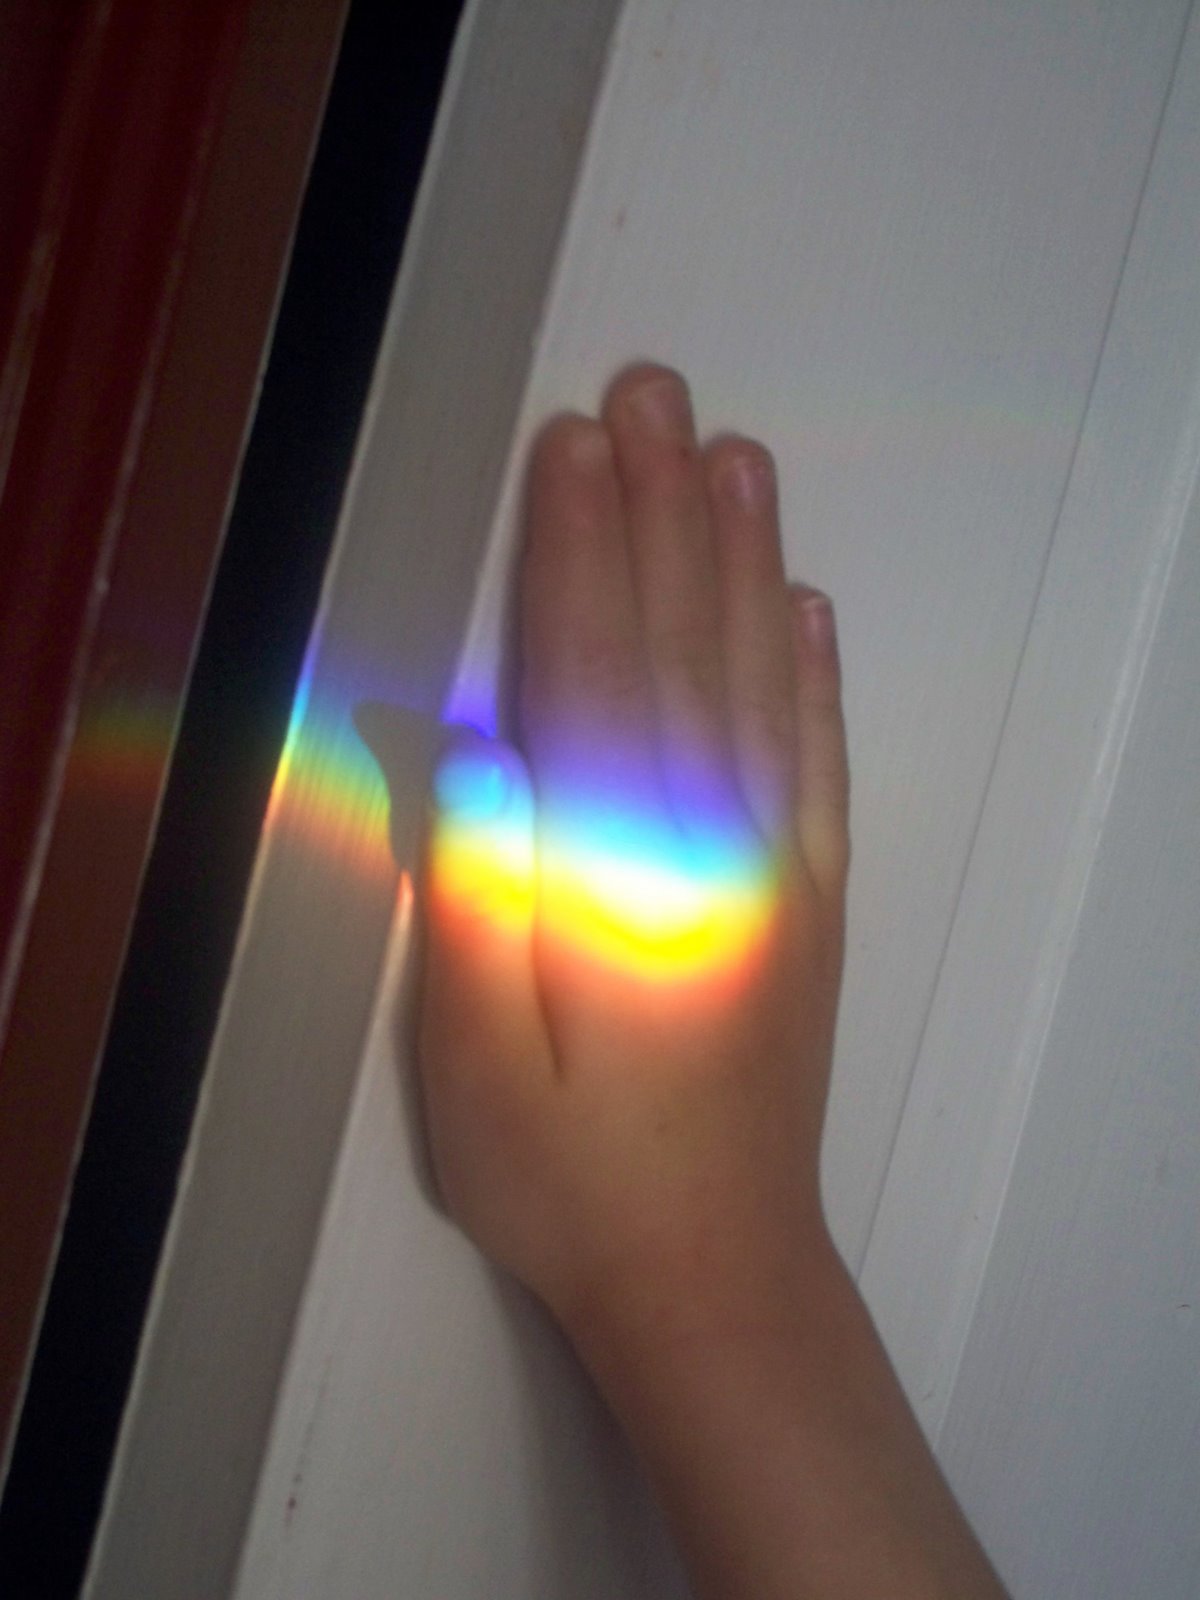 [Rainbow3.jpg]